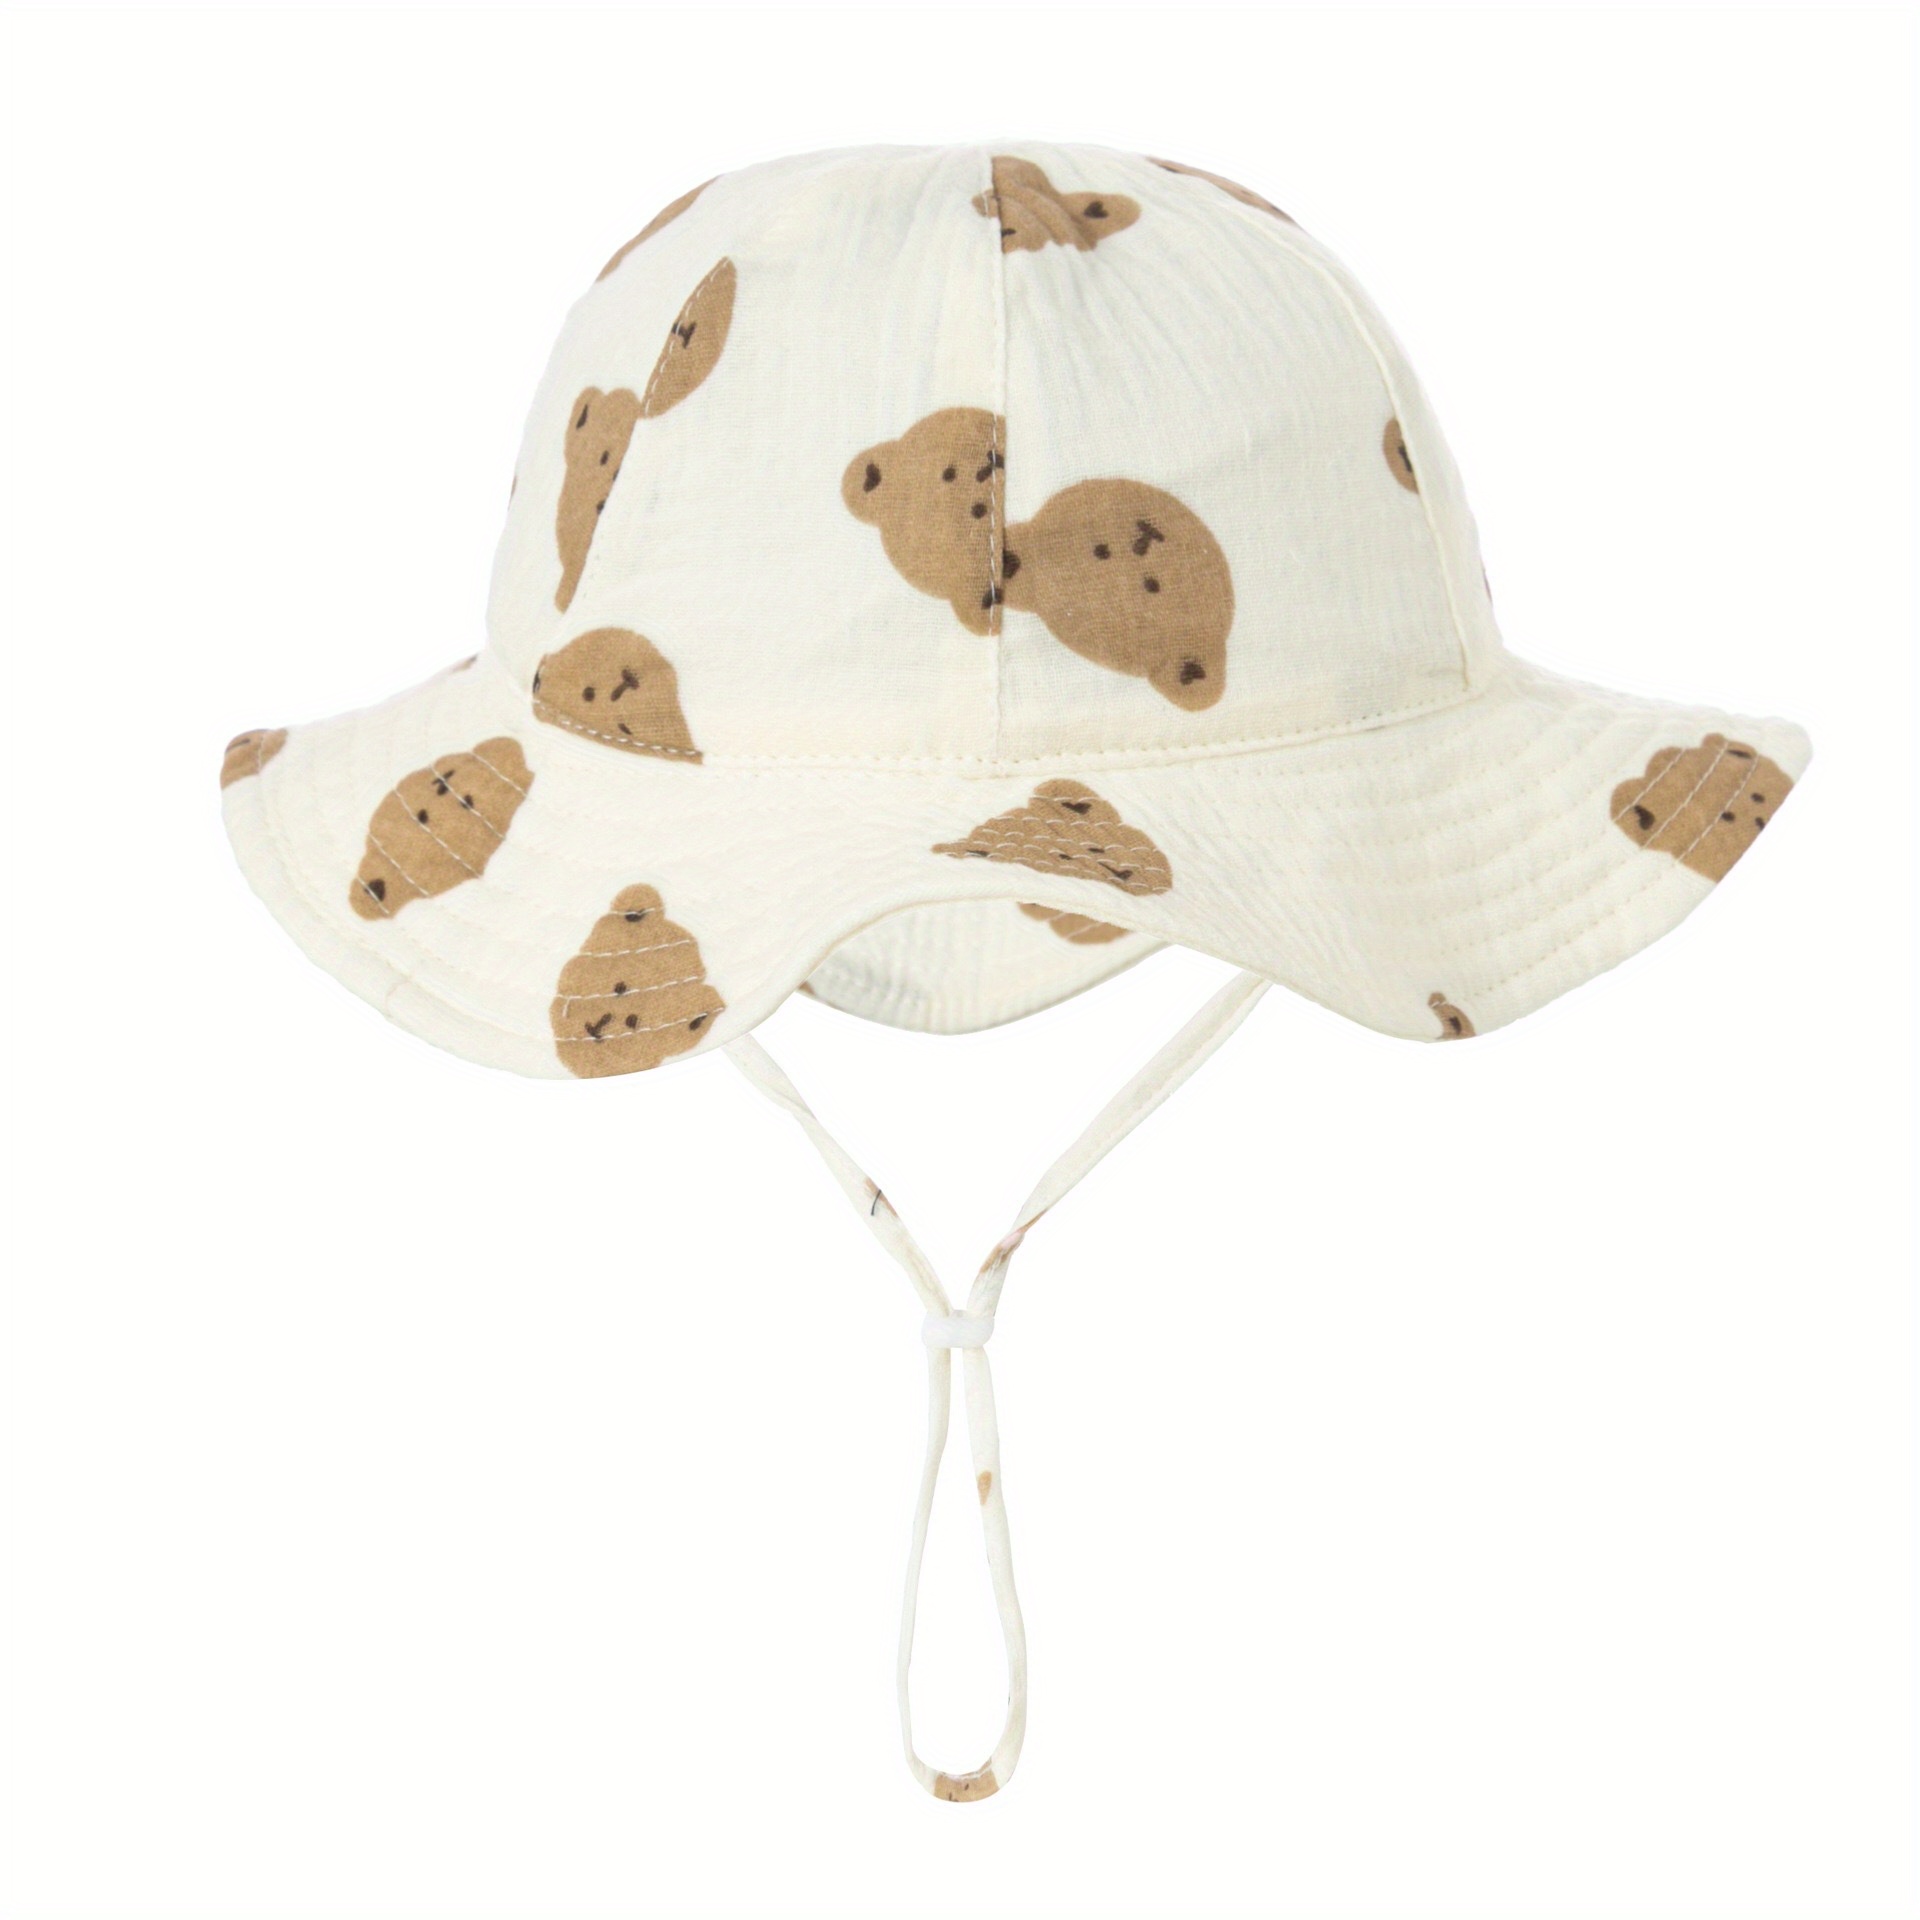 Baby Hat for Girls Kids Panama Sun Cap Adjustable Child Toddler